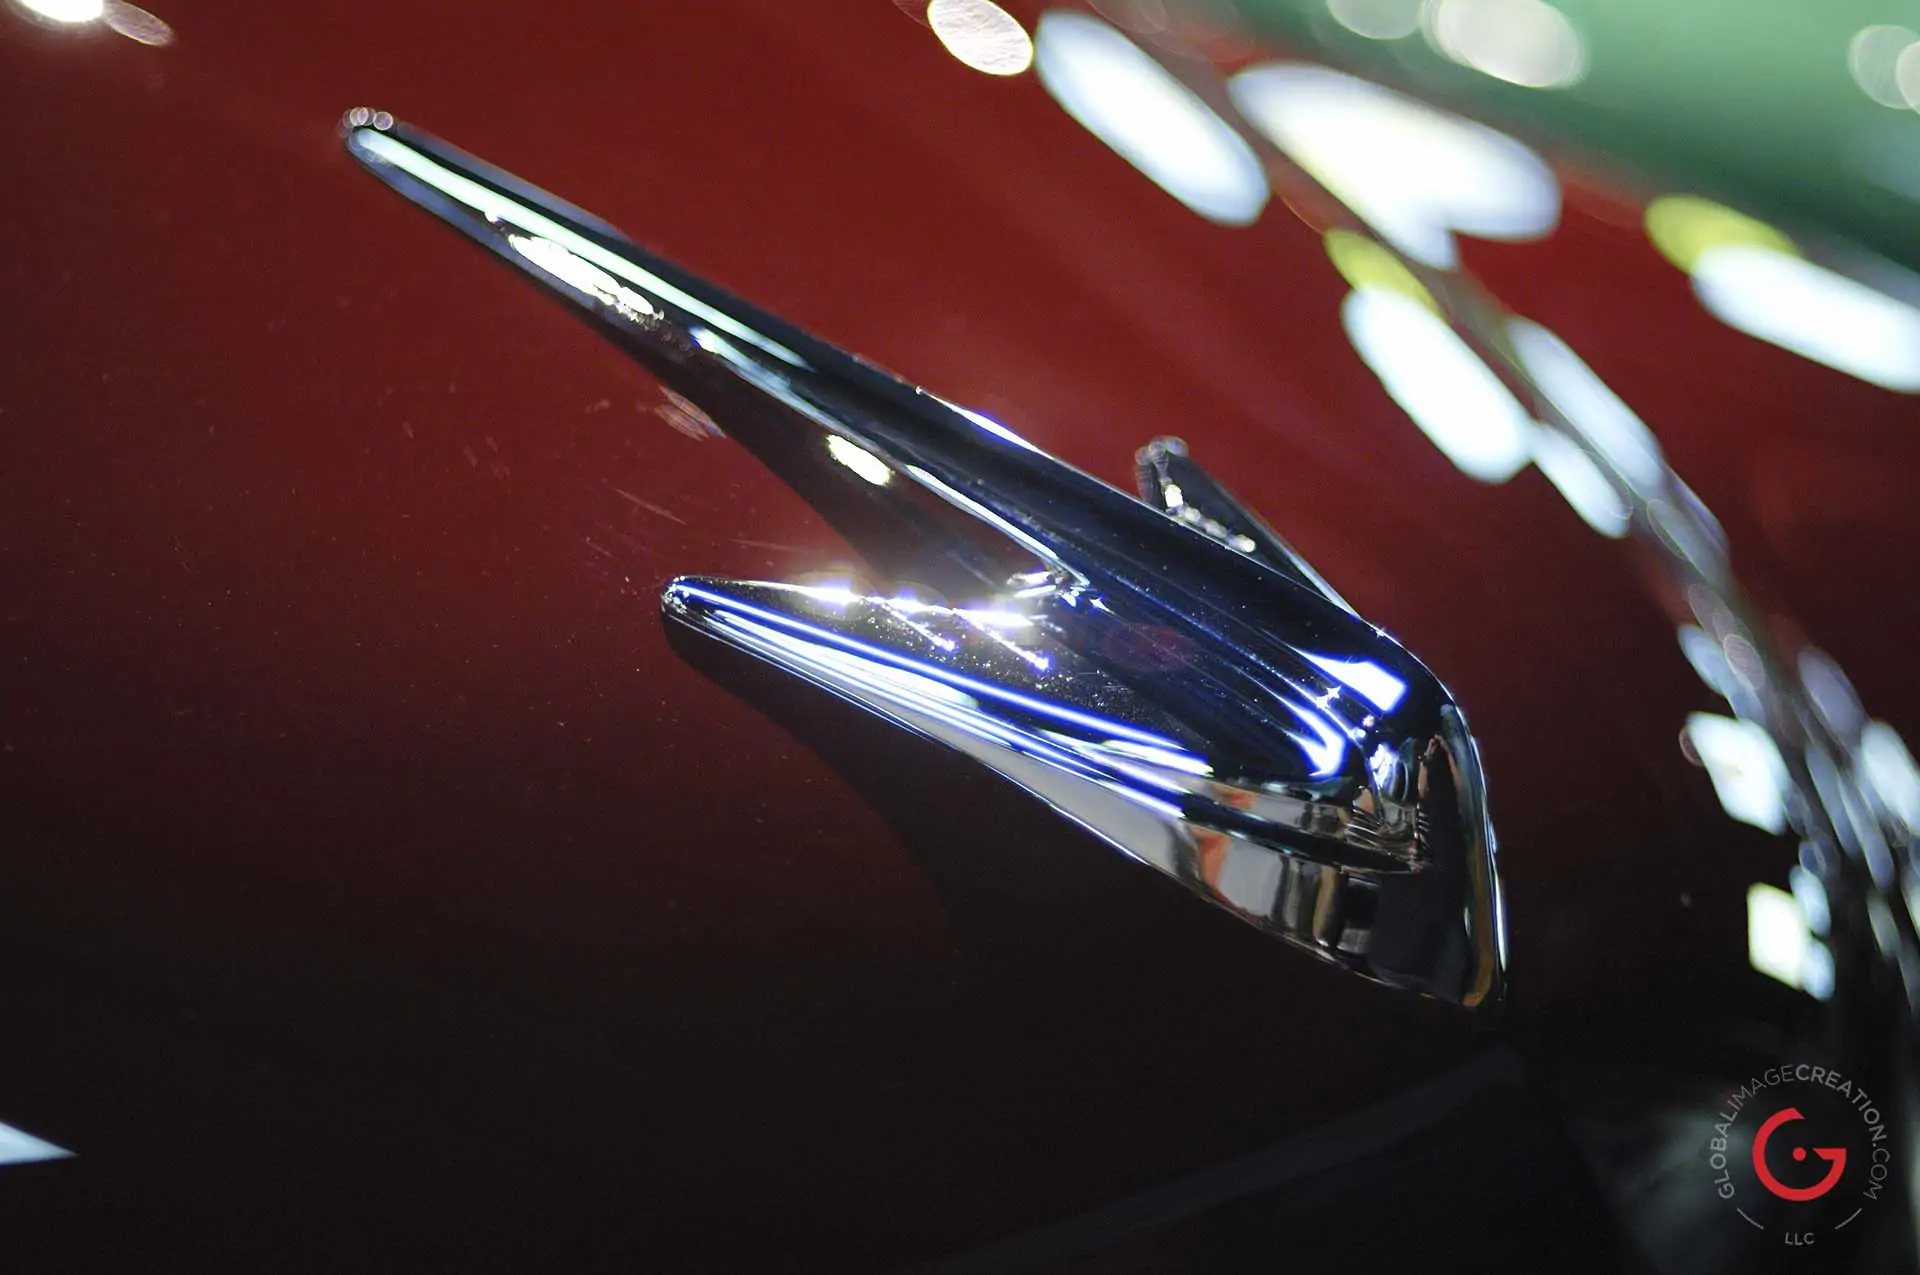 Packard Hood Emblem - Classic Cars Professional Car Photographer, Automotive Photography